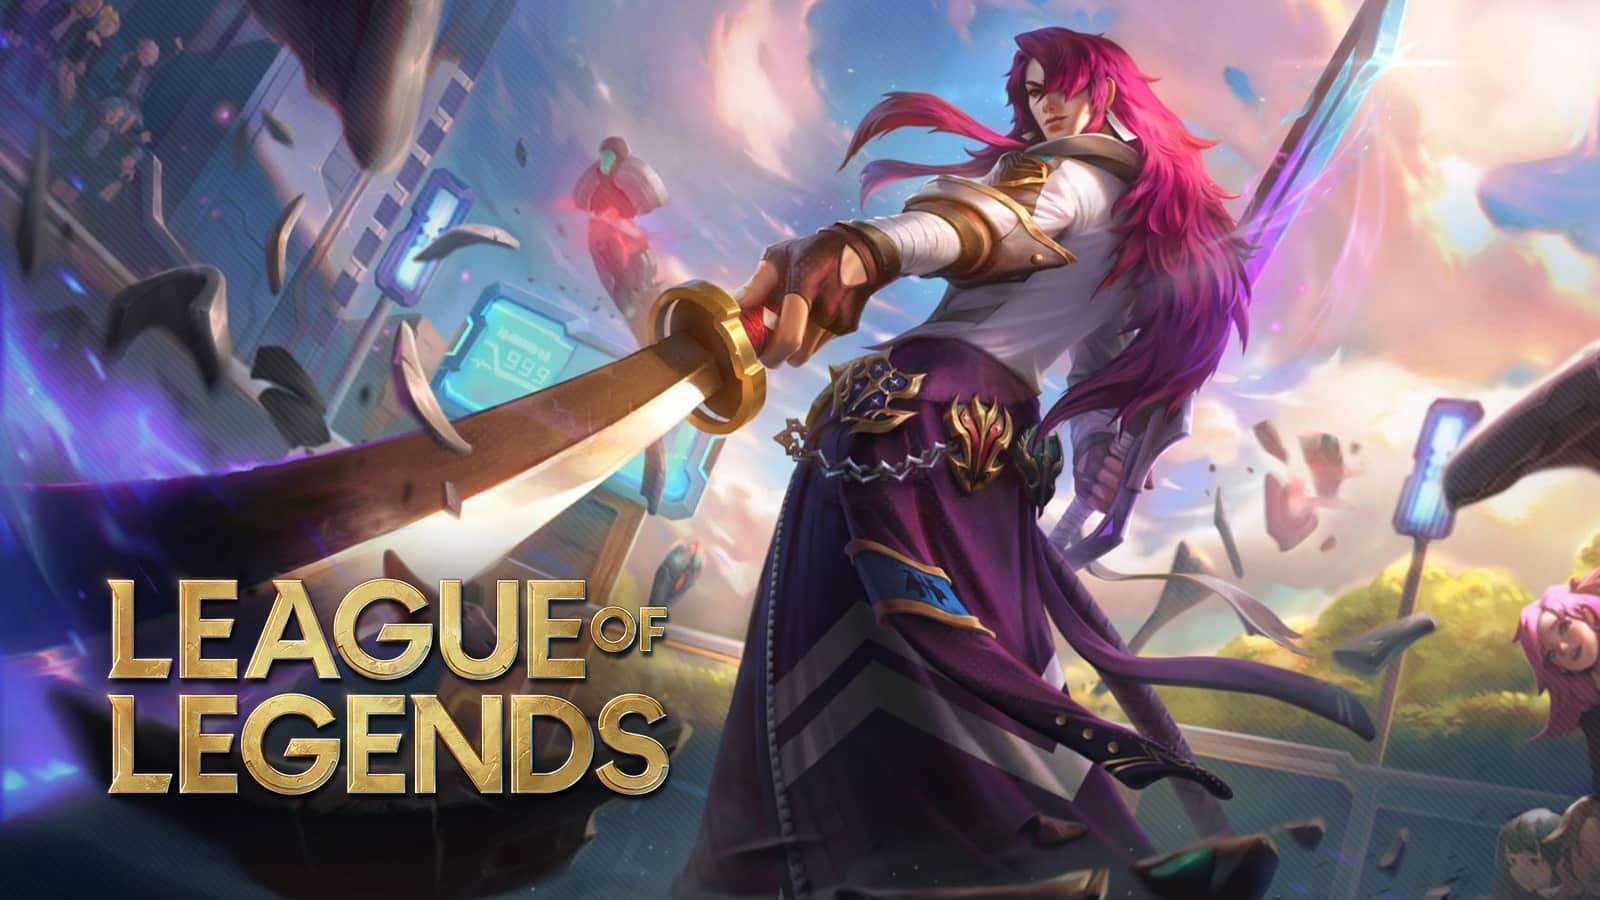 Battle Academia Yone in league of legends